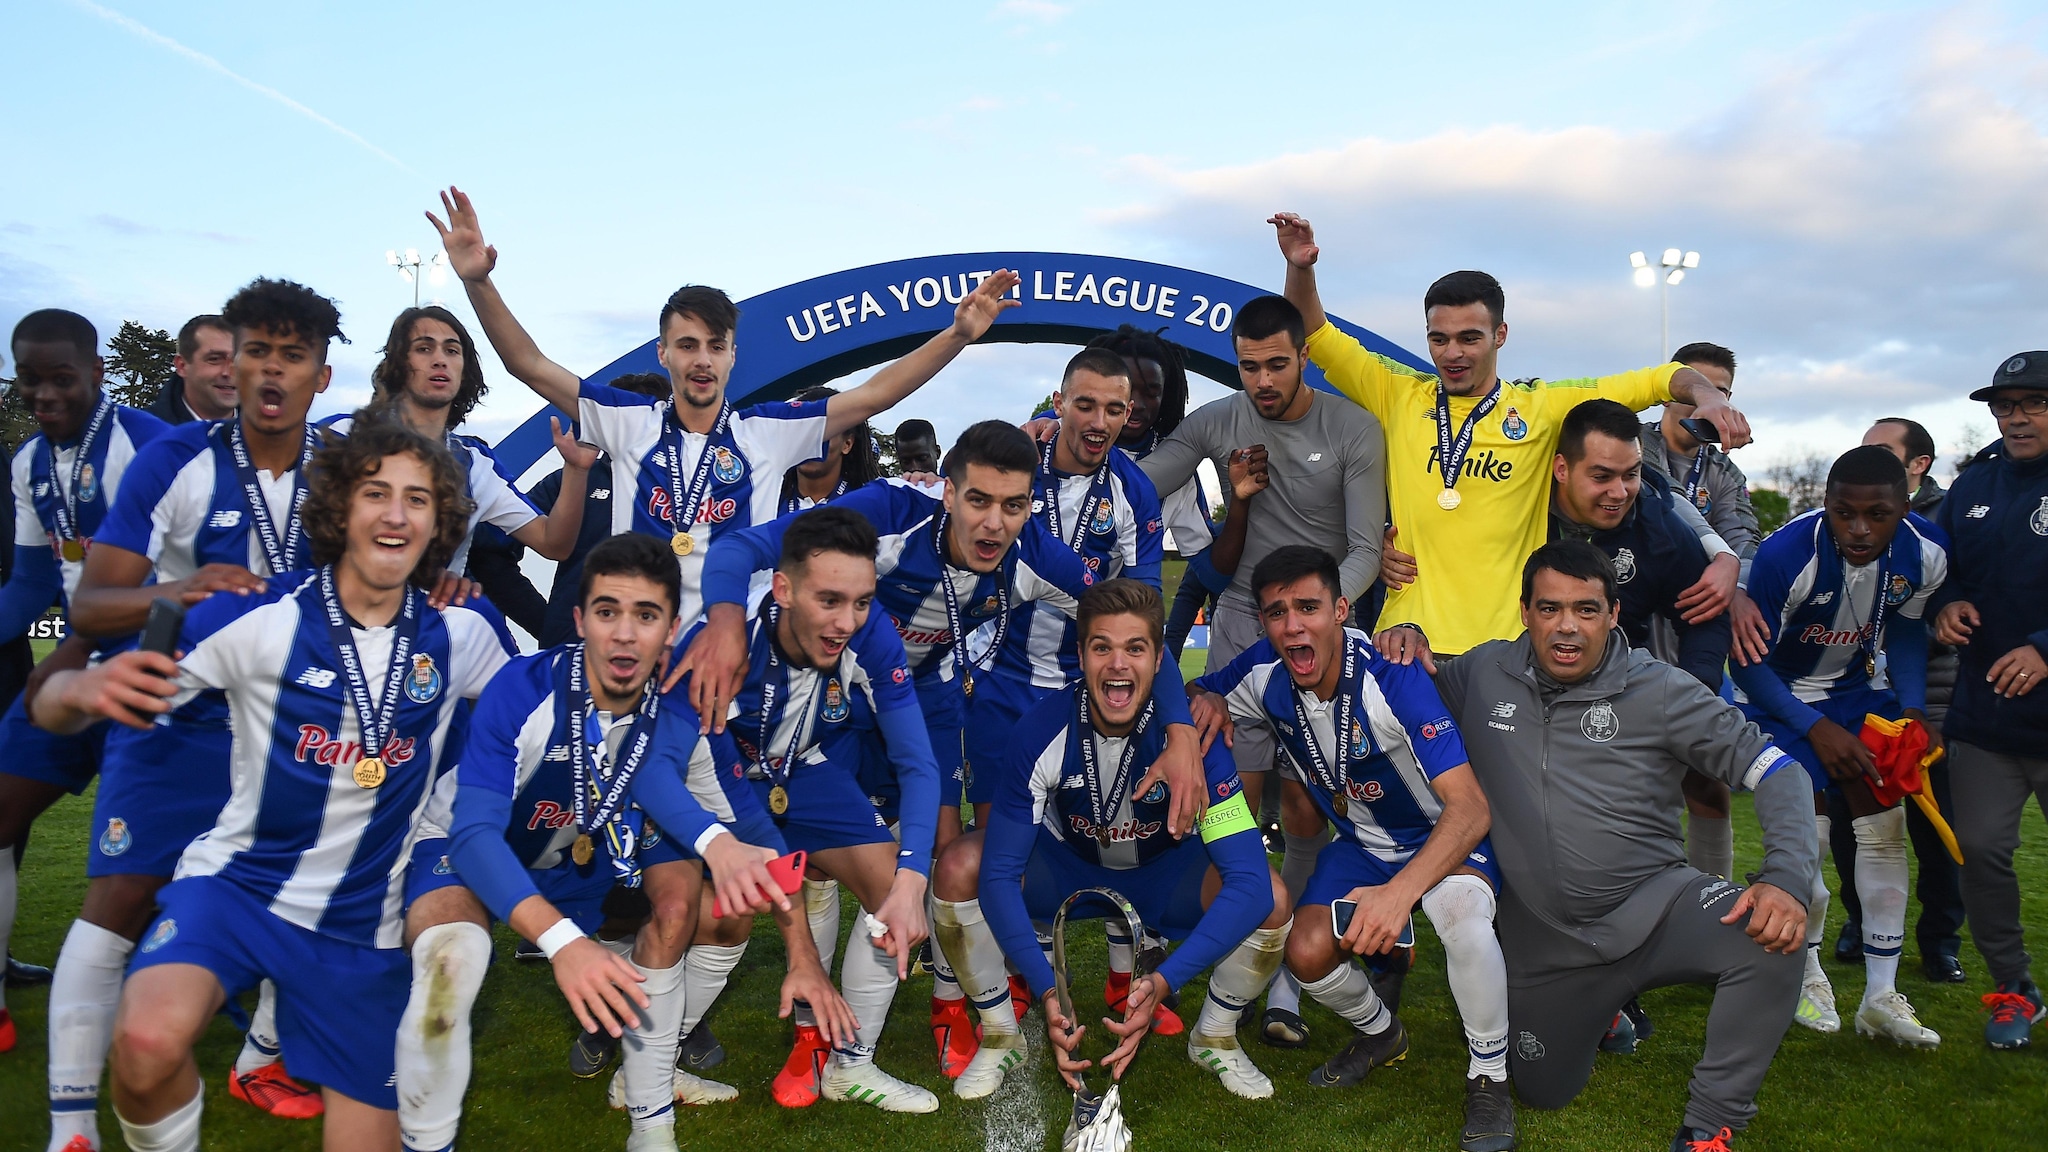 uefa youth league 2018